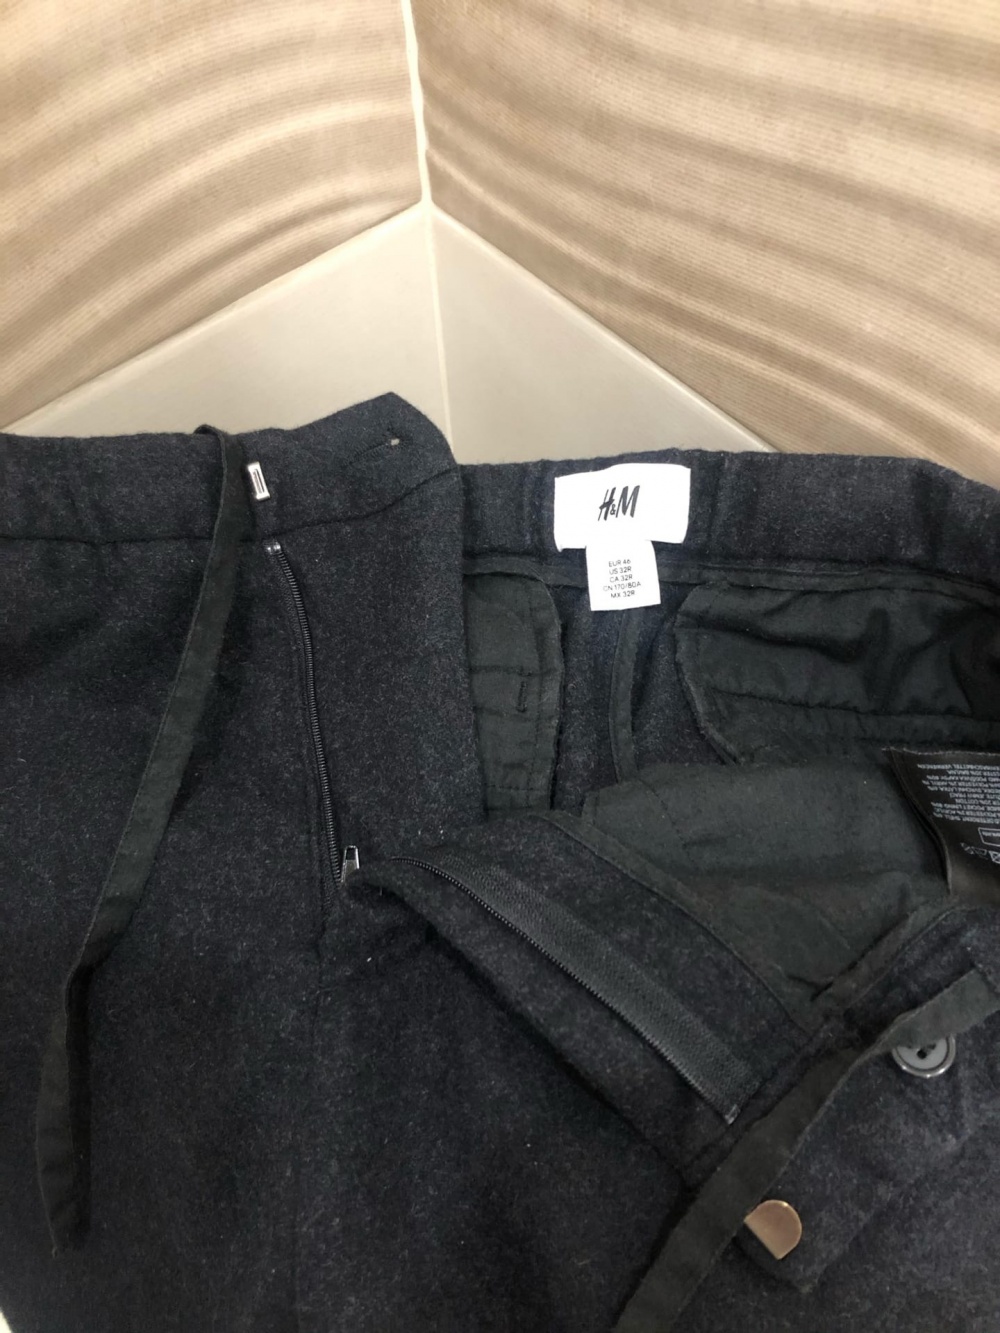 Шерстяные брюки джогеры H&M.Размер Евр.46.